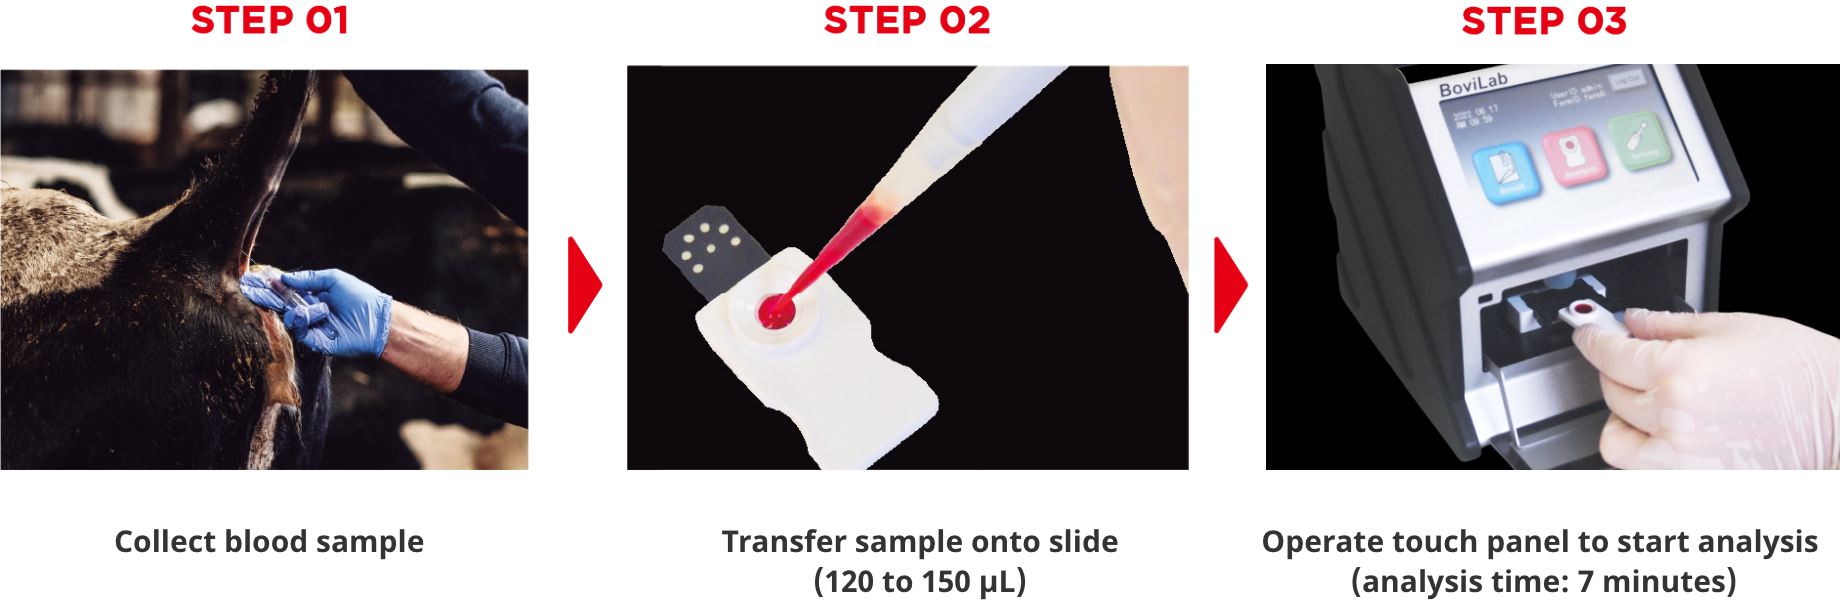 3 Simple Steps!